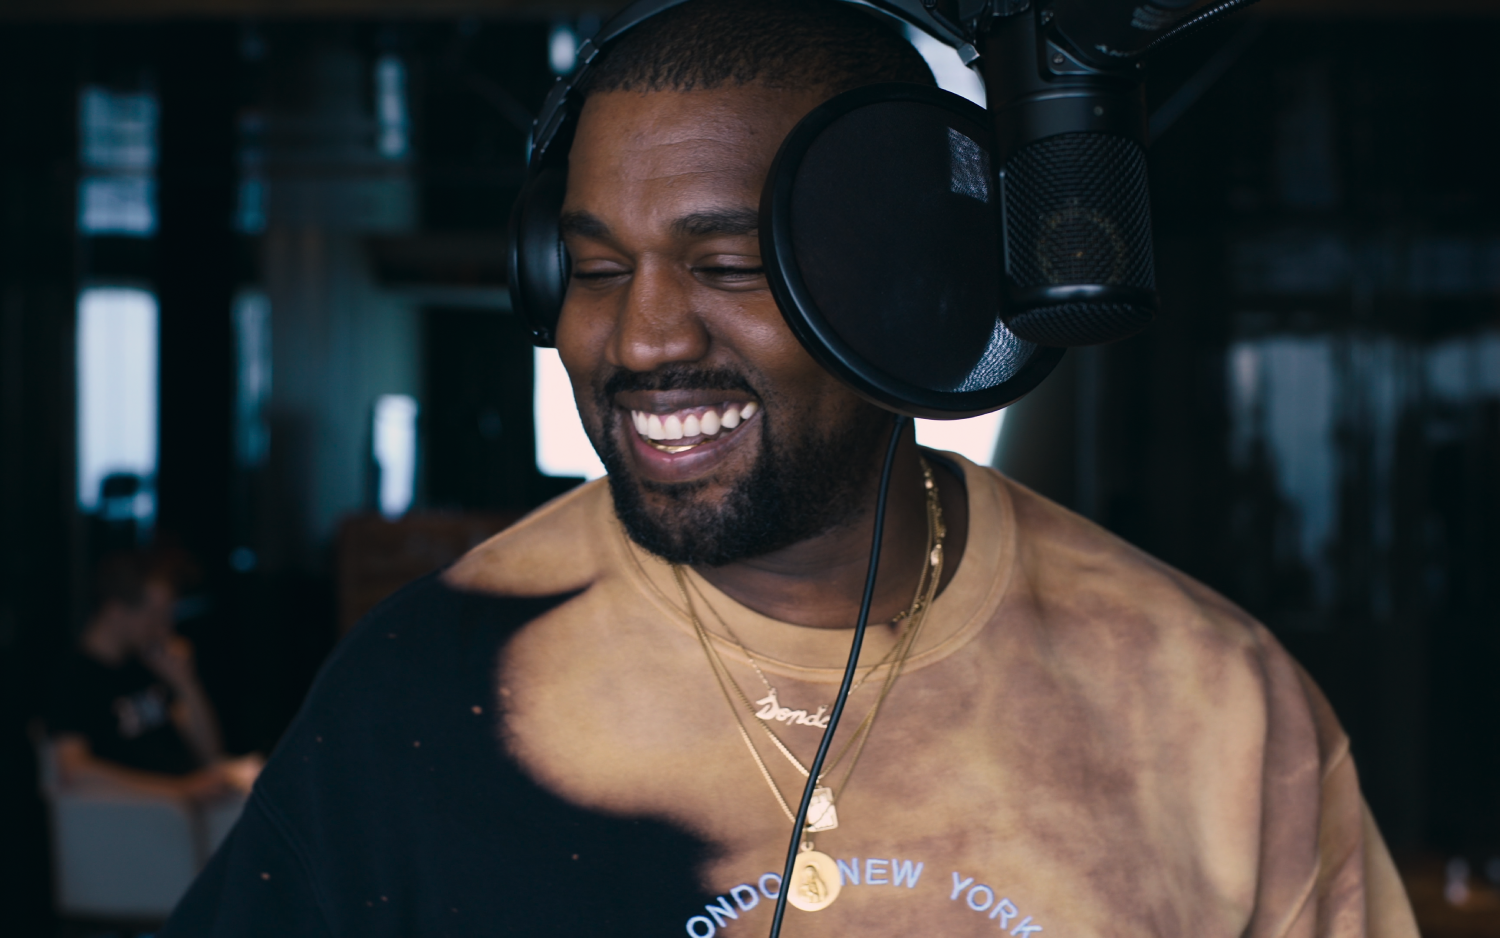 O rapper Kanye West sorri em cena da trilogia documental jeen-yuhs, da Netflix